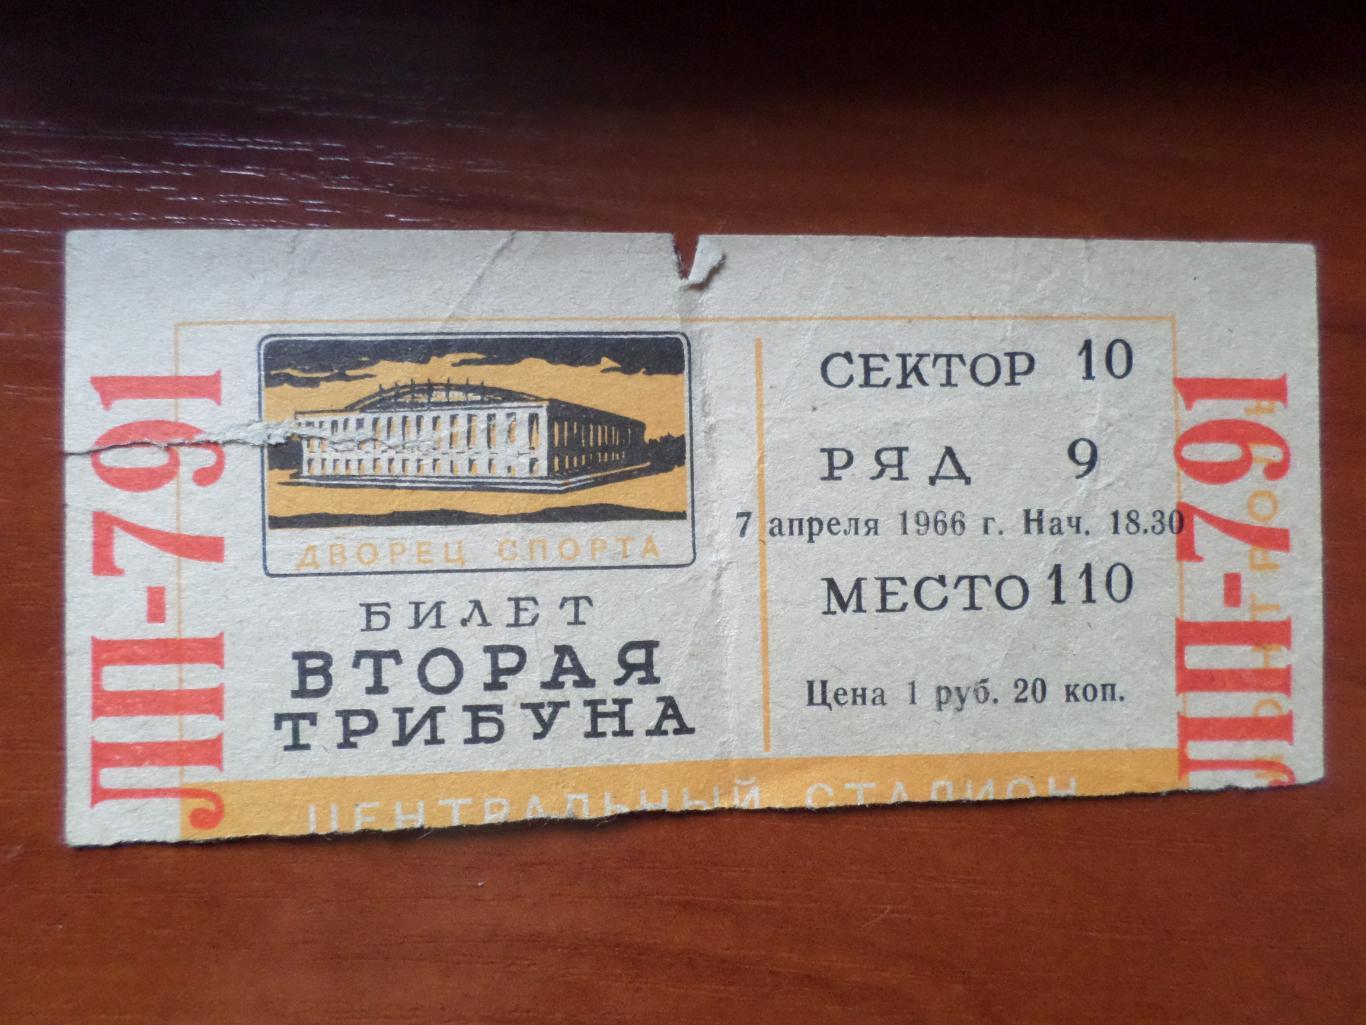 Билет к матчу Динамо Москва - Торпедо Горький 6 апреля 1966 г